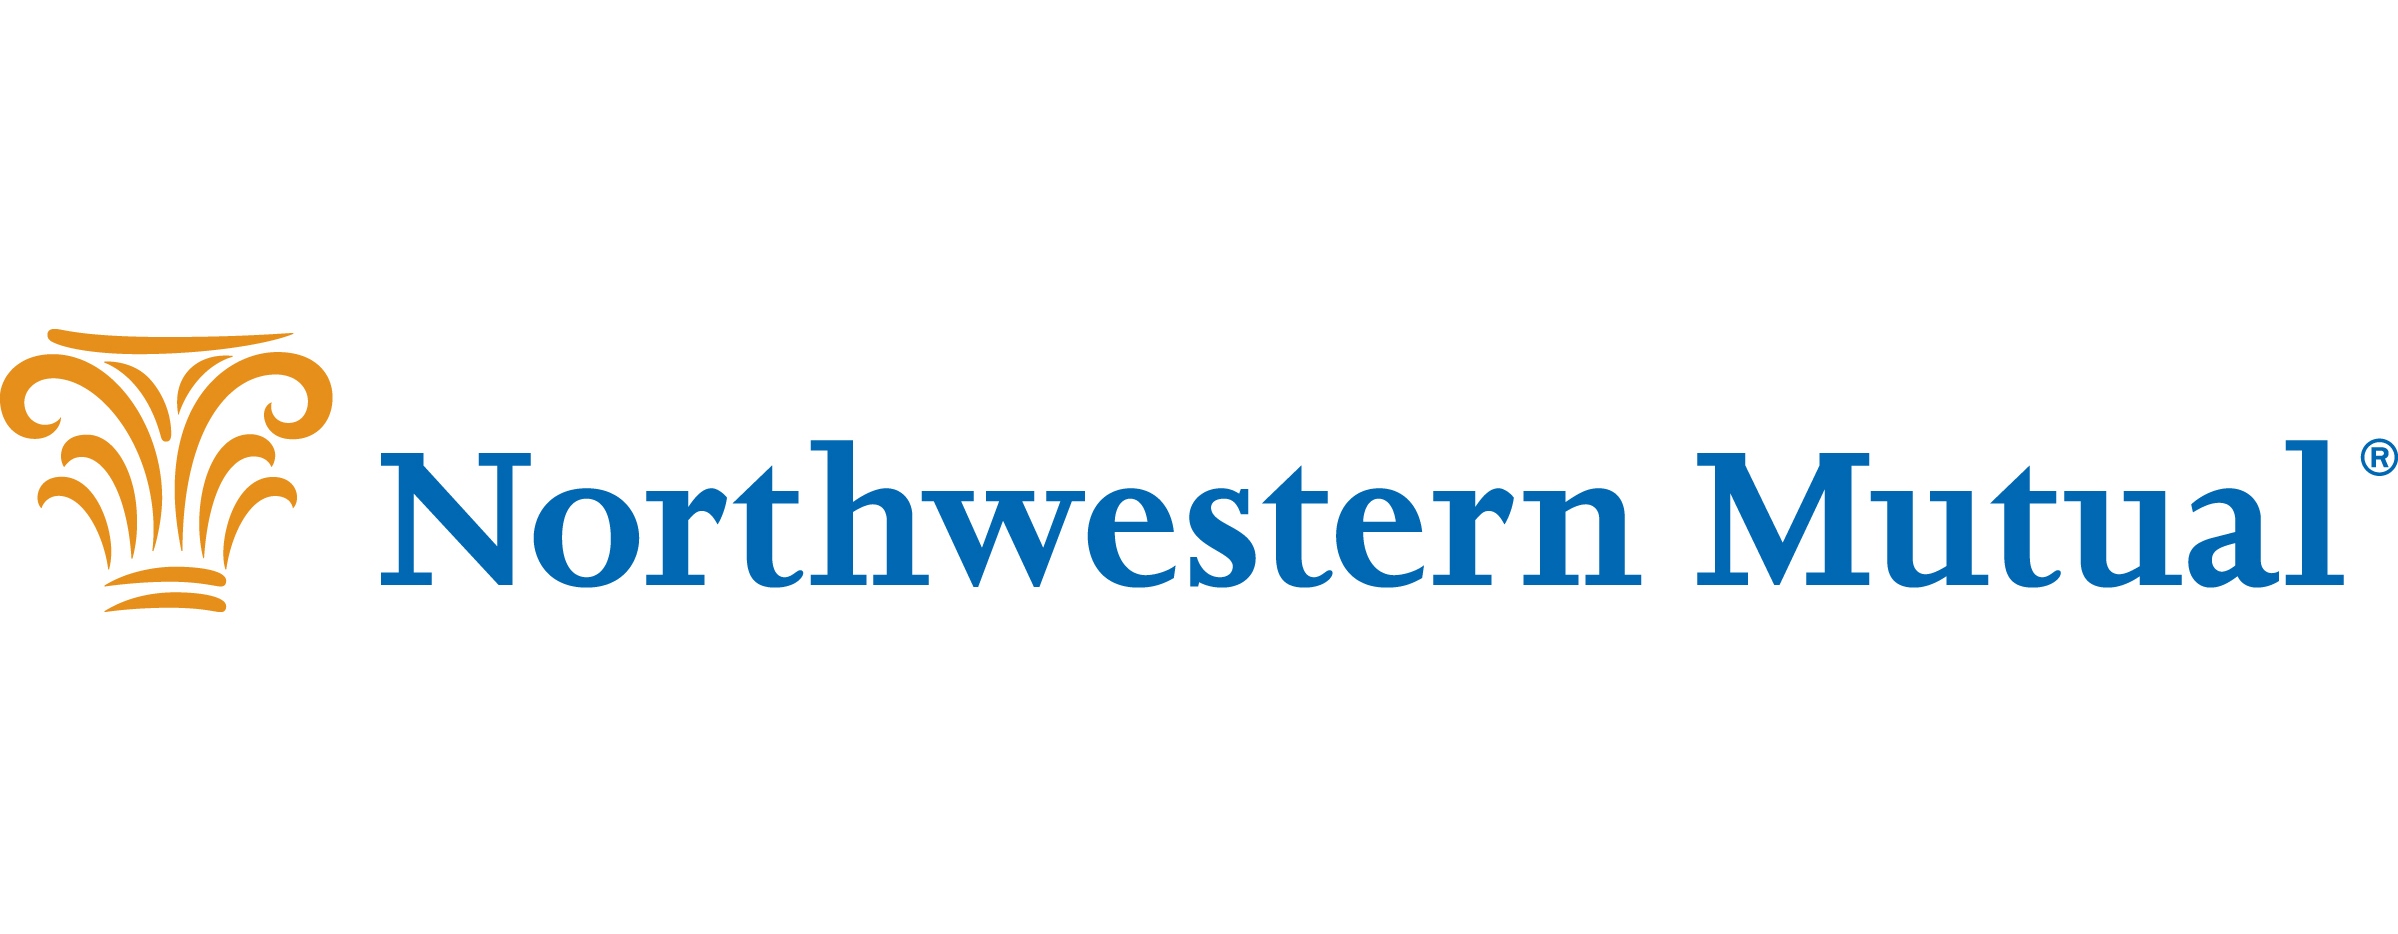 northwestern mutual logo original2